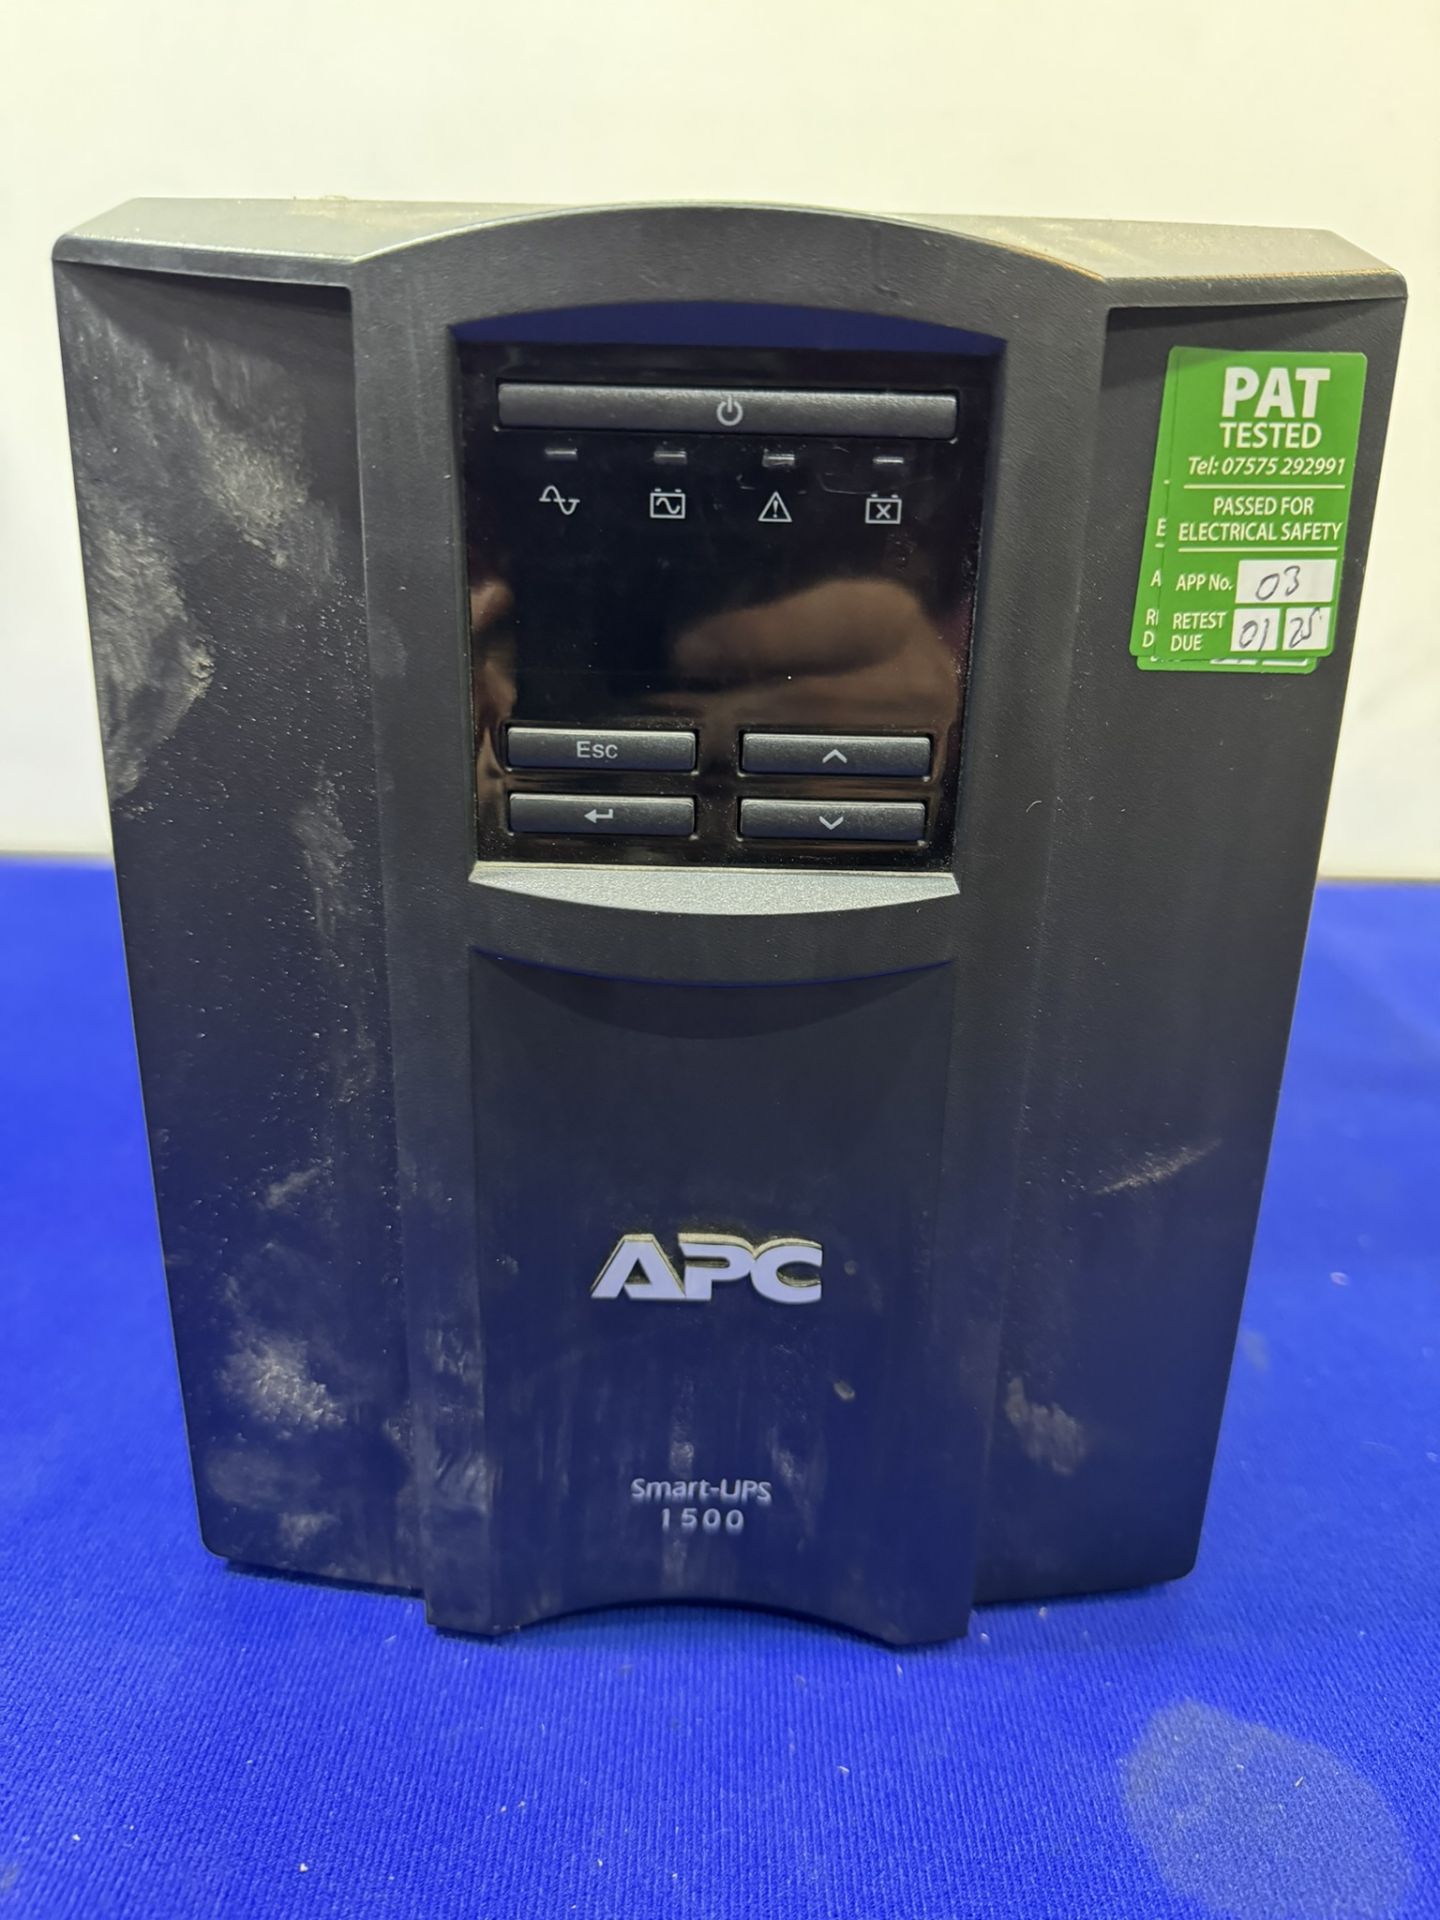 APC Smart-Ups 1500 Server Back Up Battery - Image 3 of 4